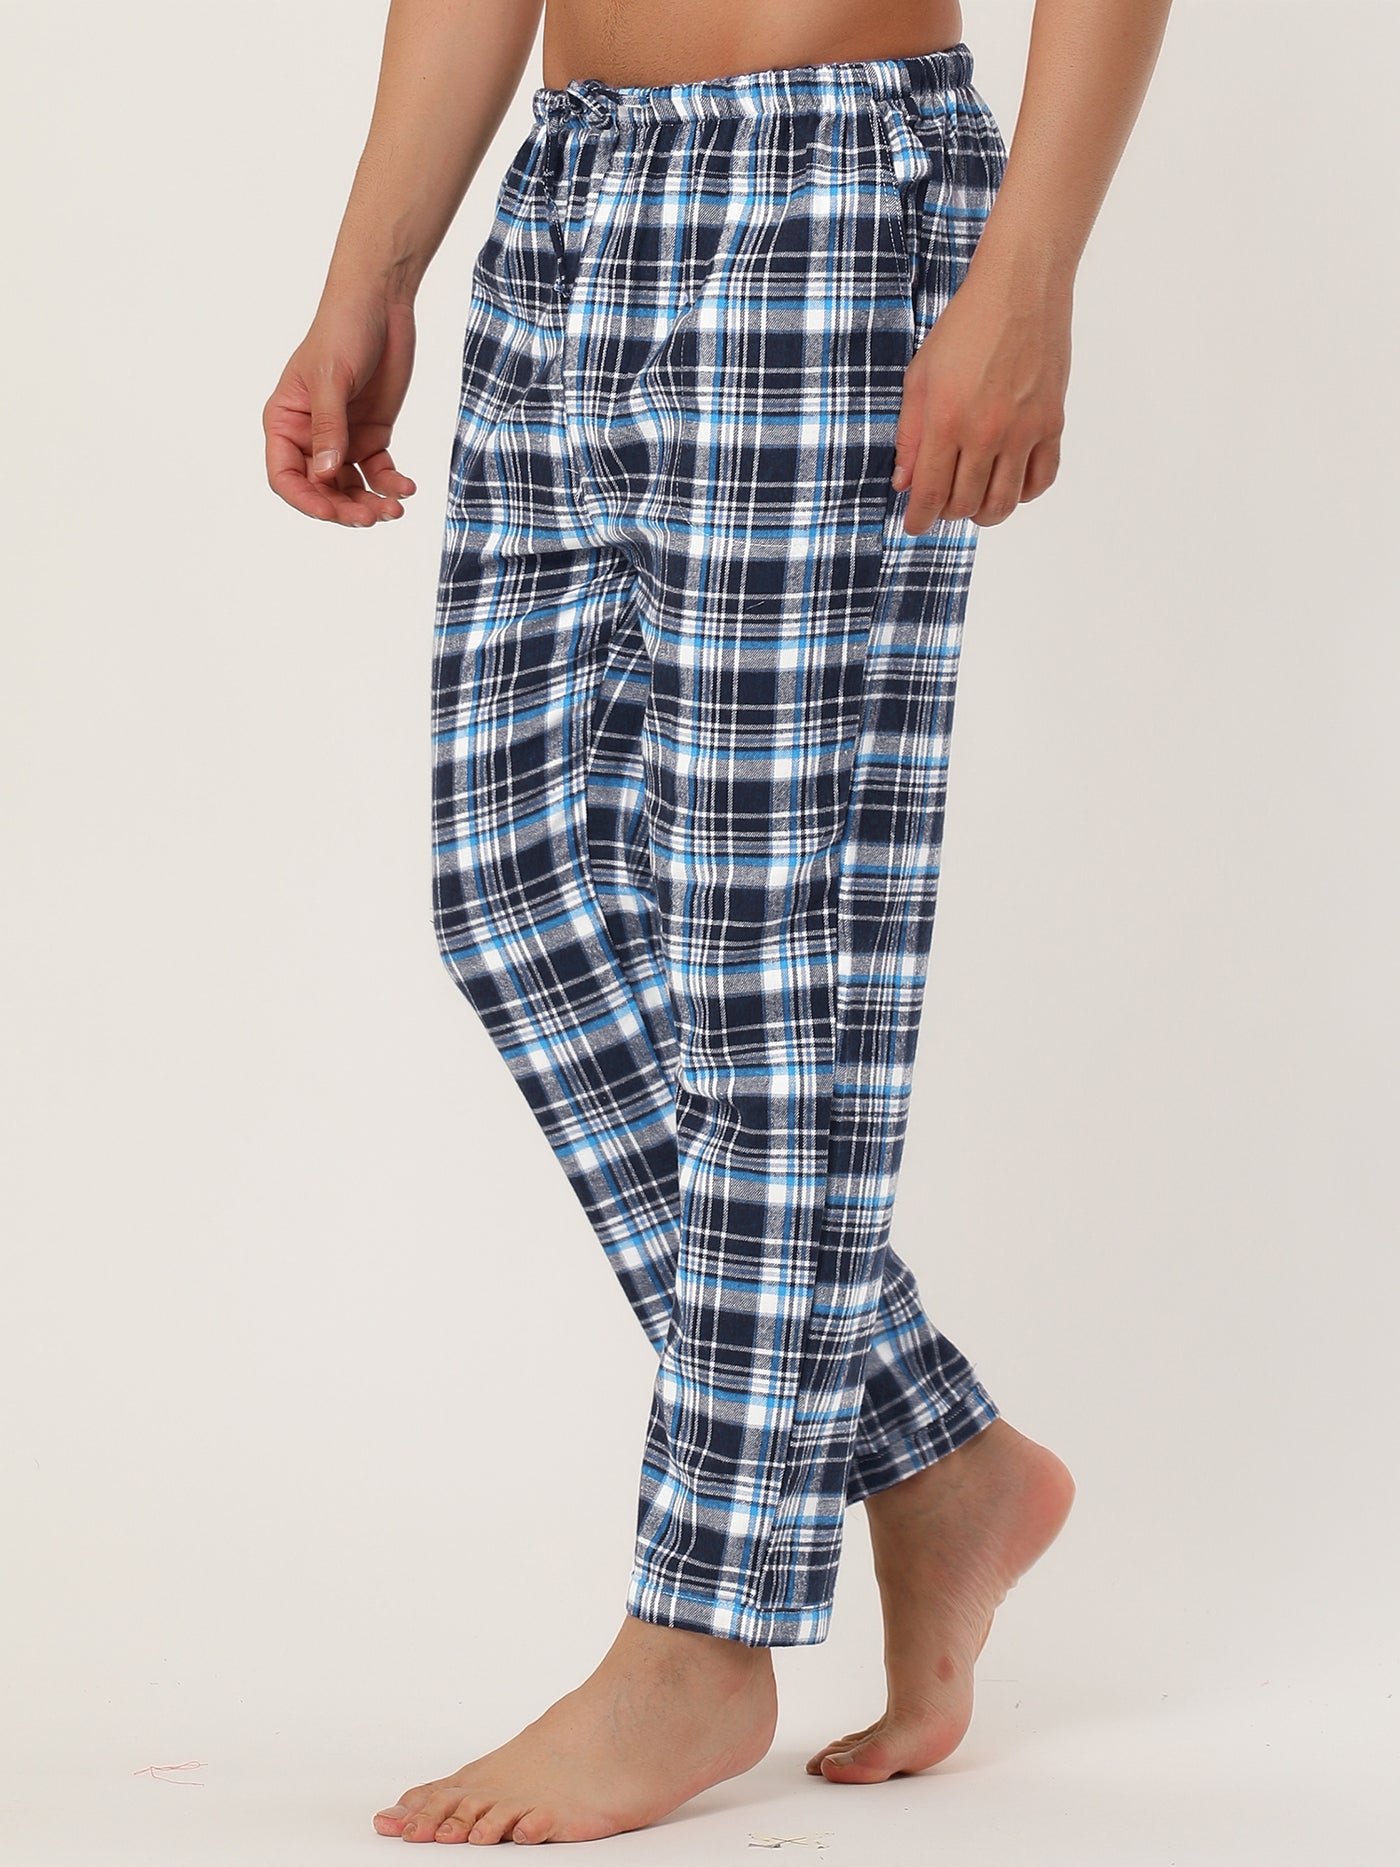 Bublédon Winter Flannel Plaid Drawstring Waist Pajamas Pants